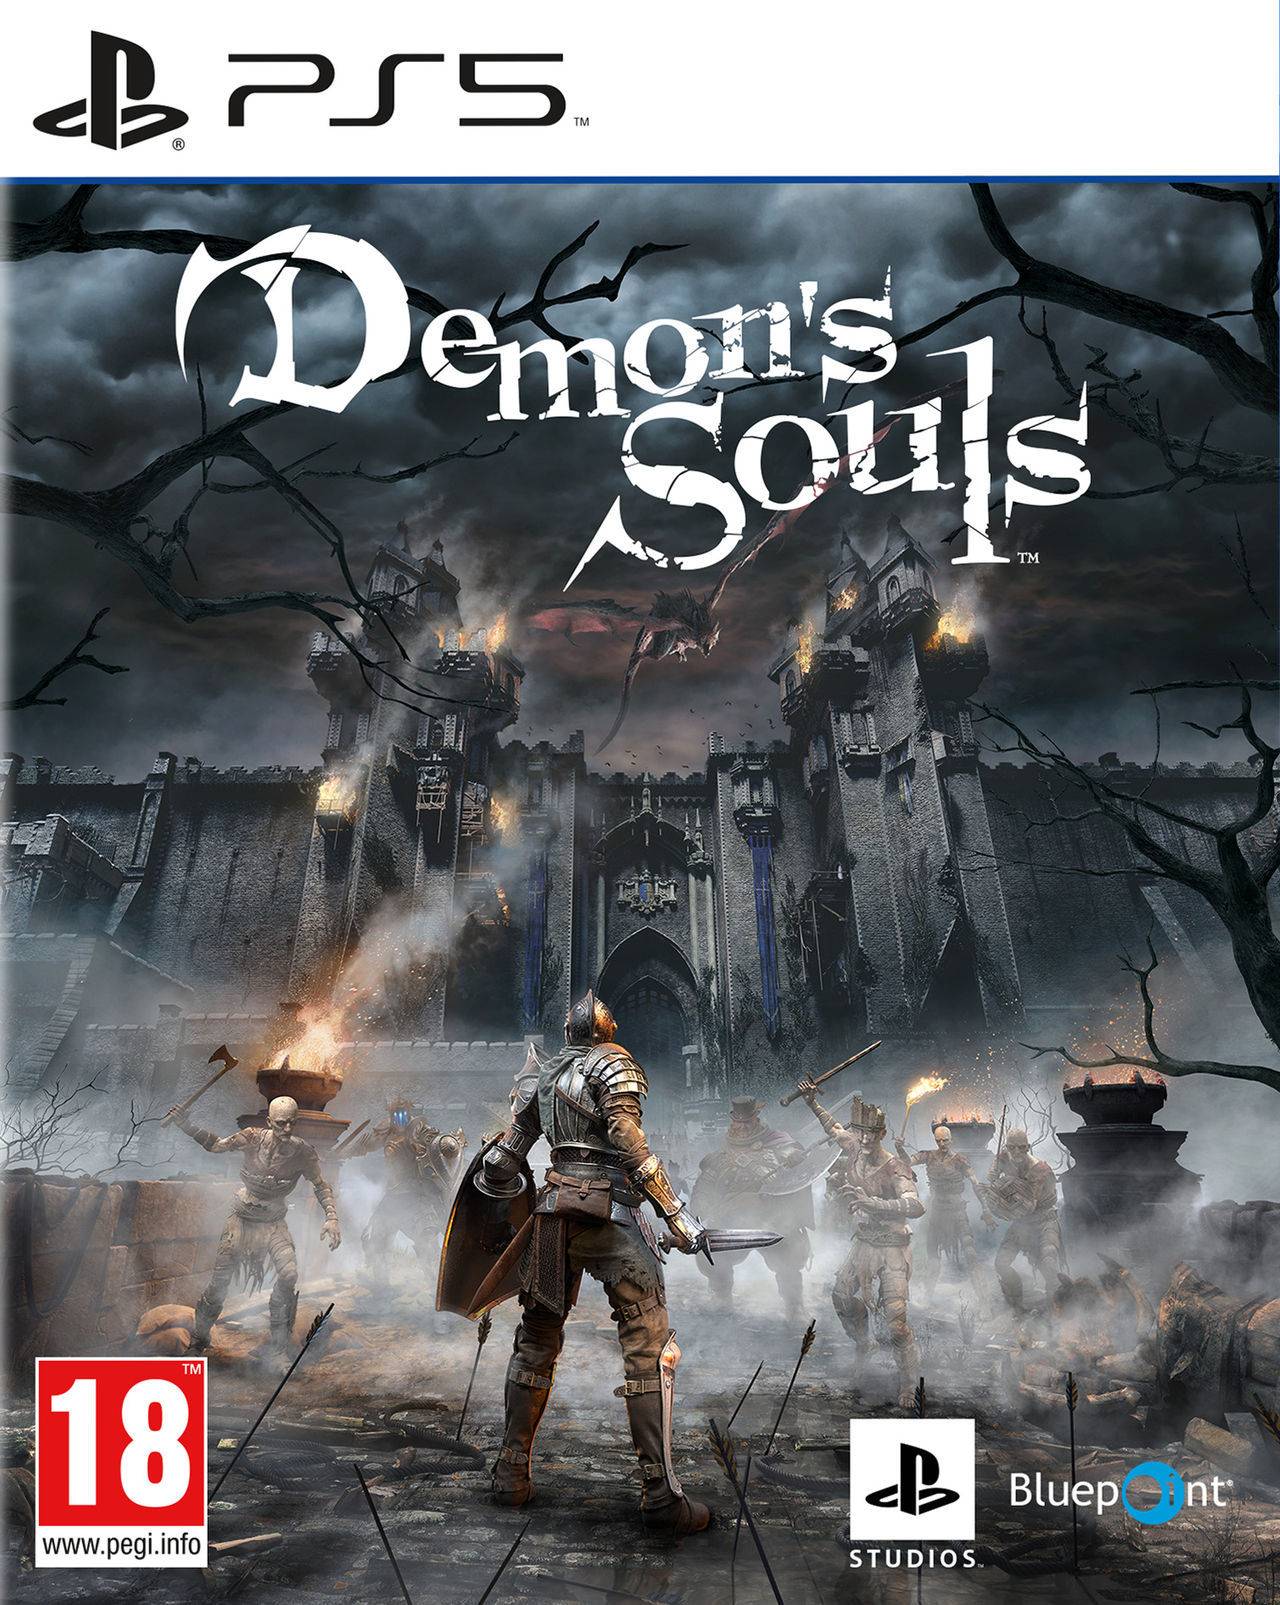 demon souls remake download free